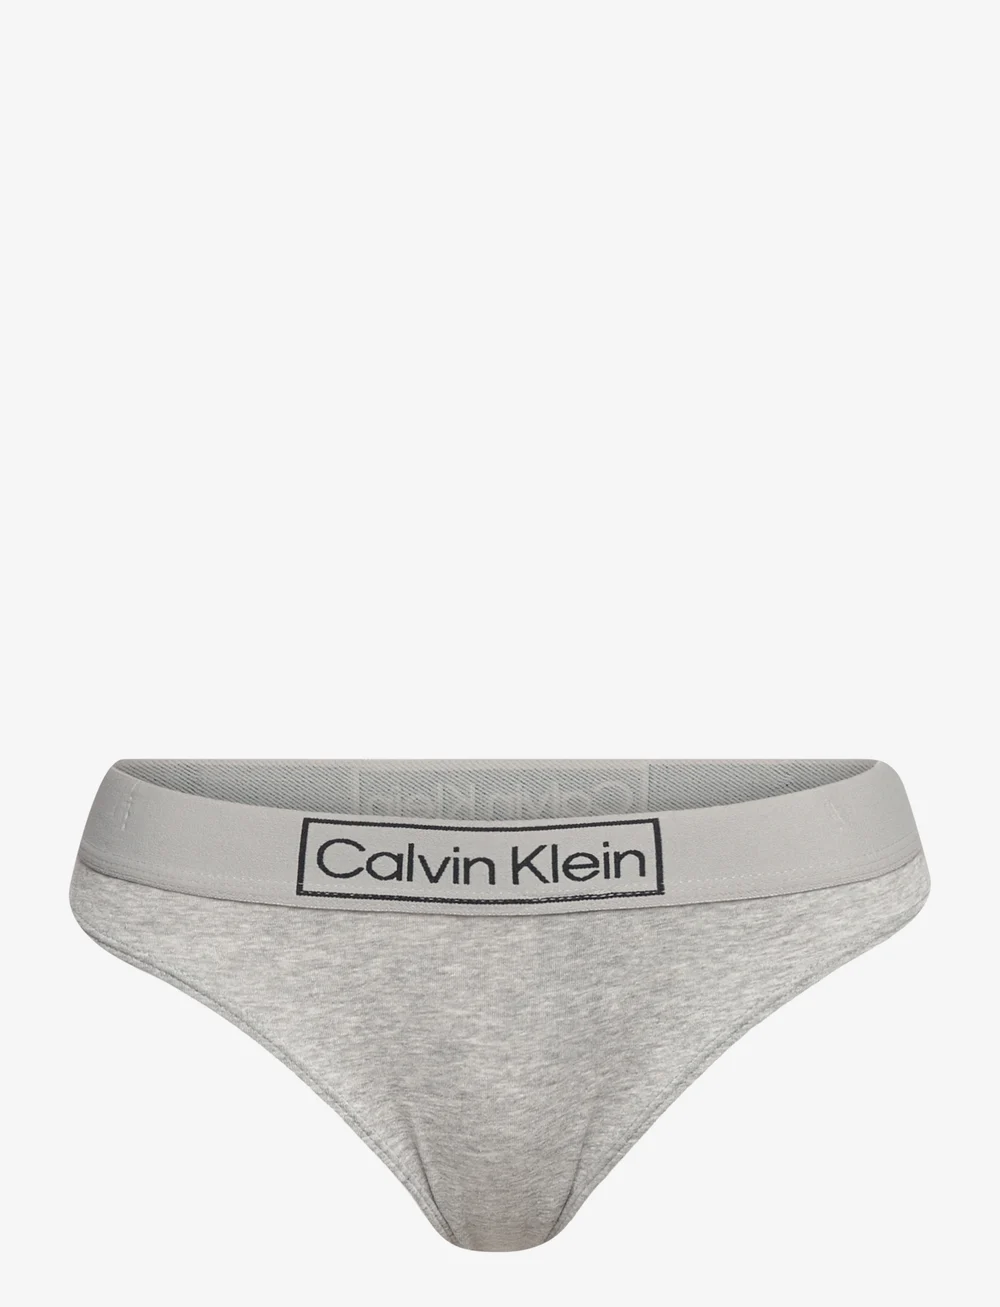 Calvin Klein Thong – panties – shop at Booztlet